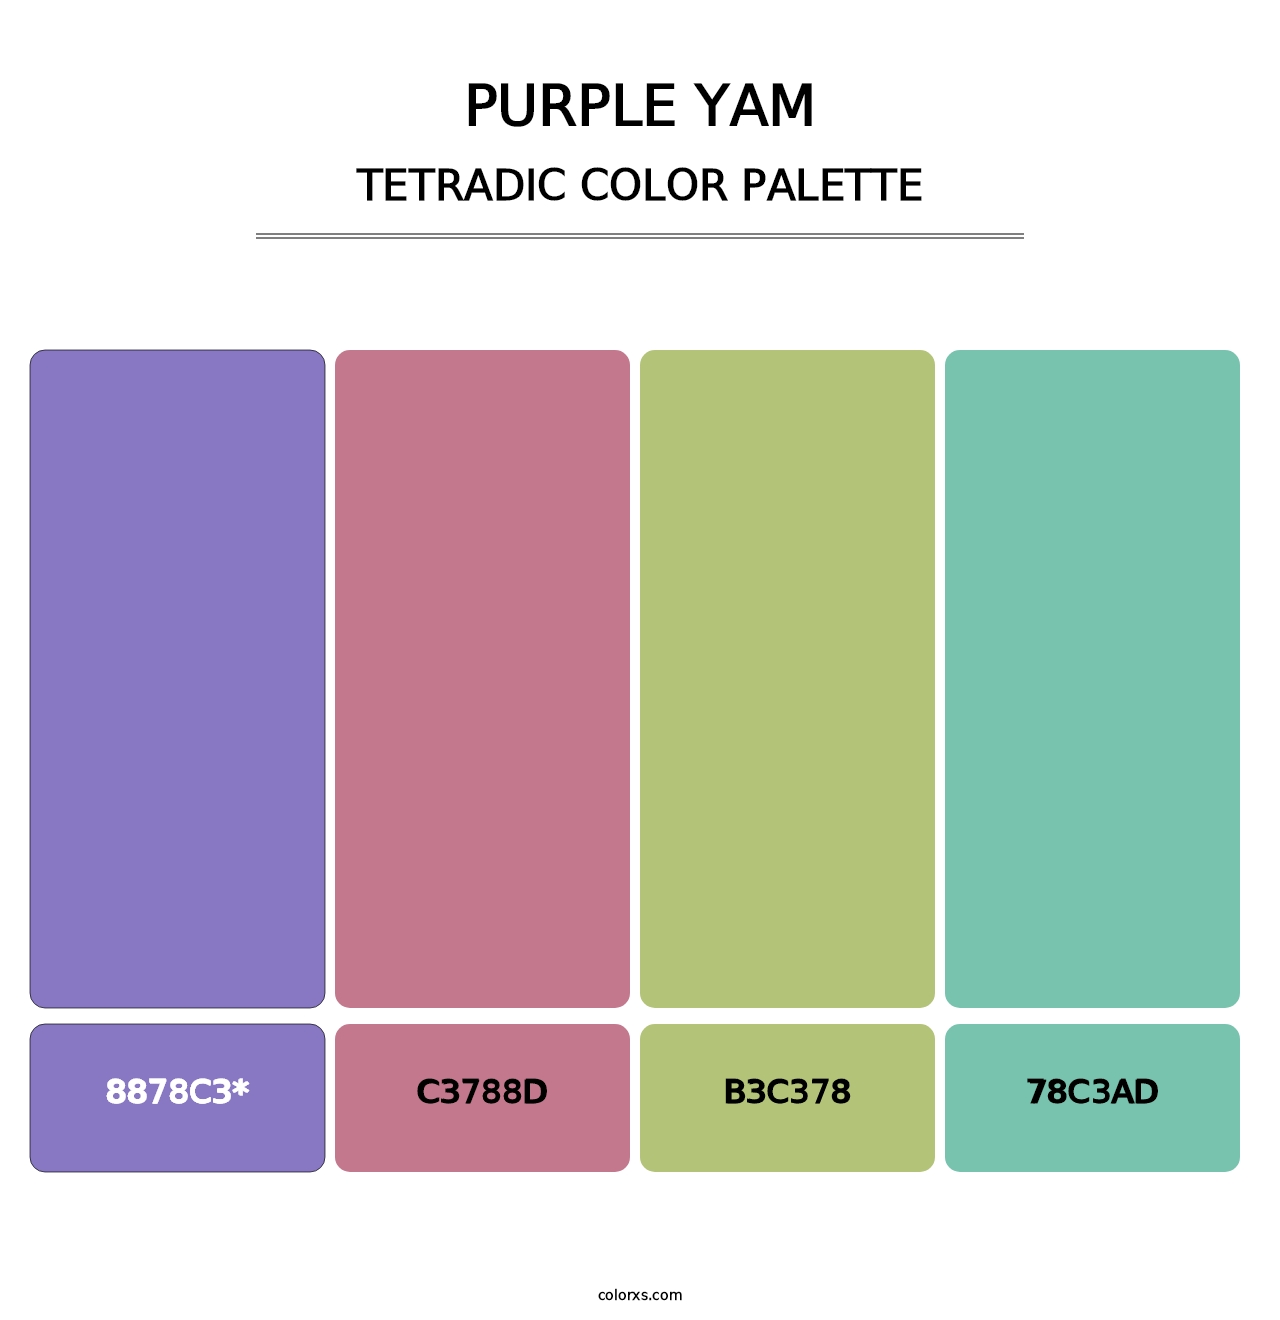 Purple Yam - Tetradic Color Palette